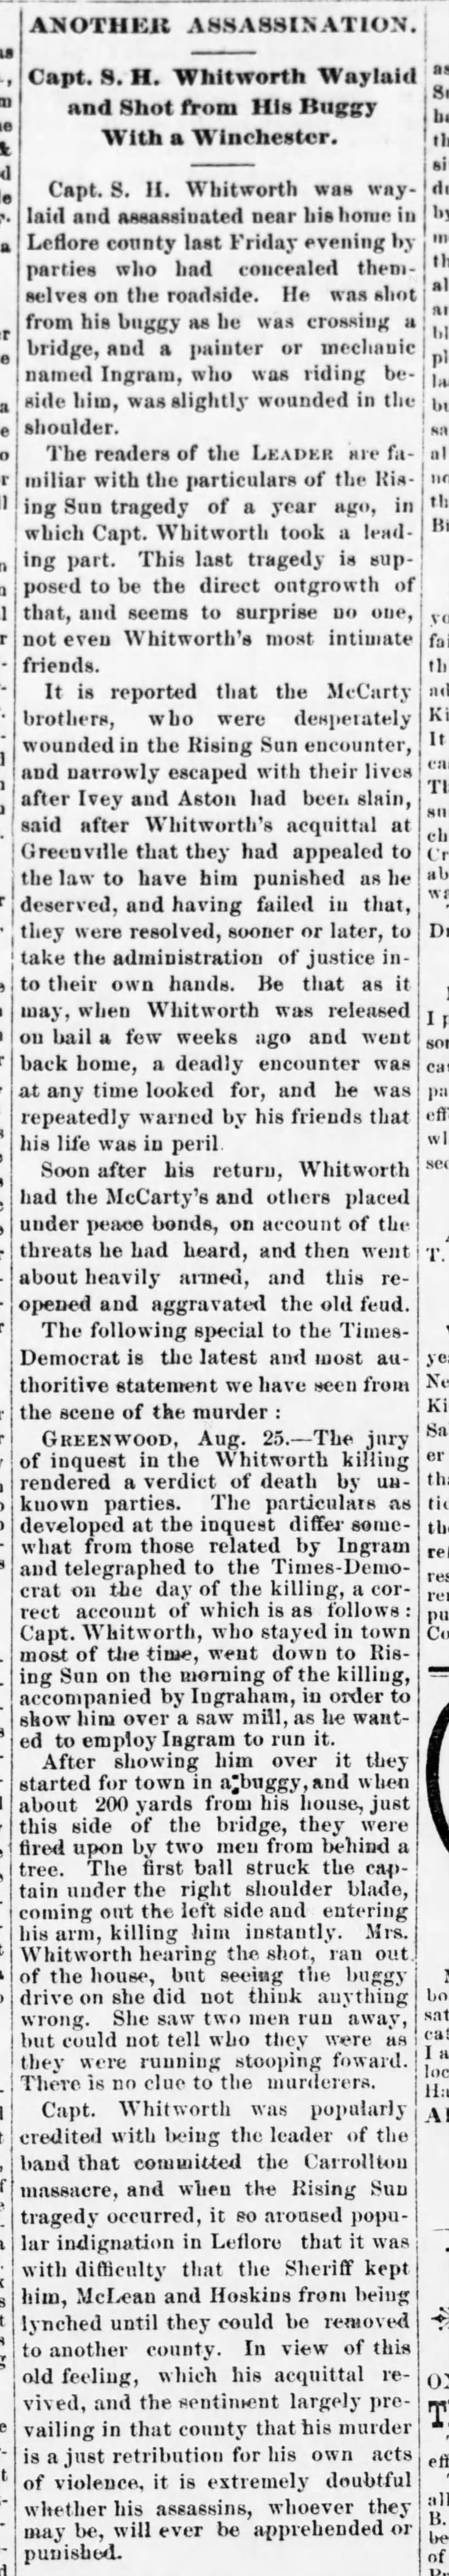 S. H. Whitworth killed